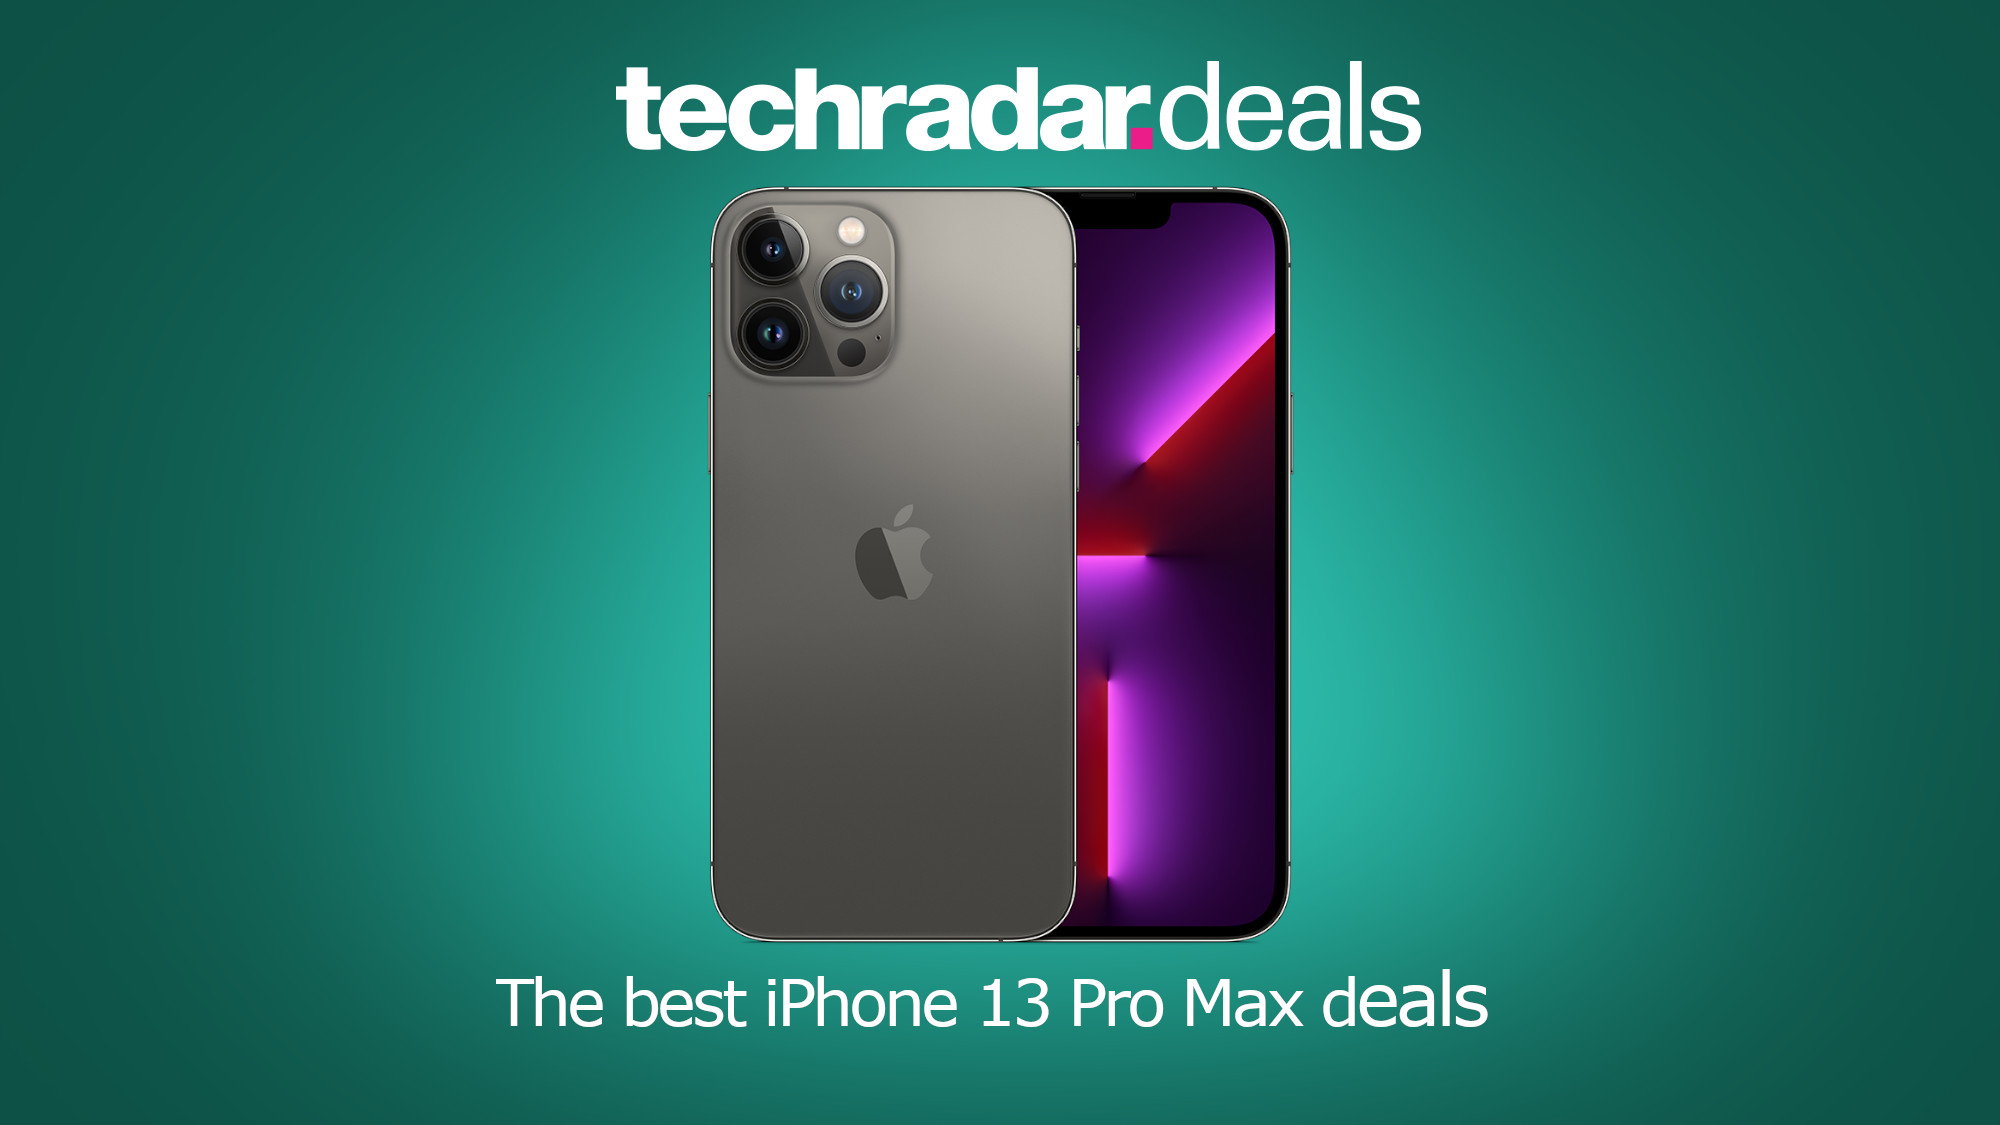 The best iPhone 13 Pro Max deals ahead of Black Friday TechRadar